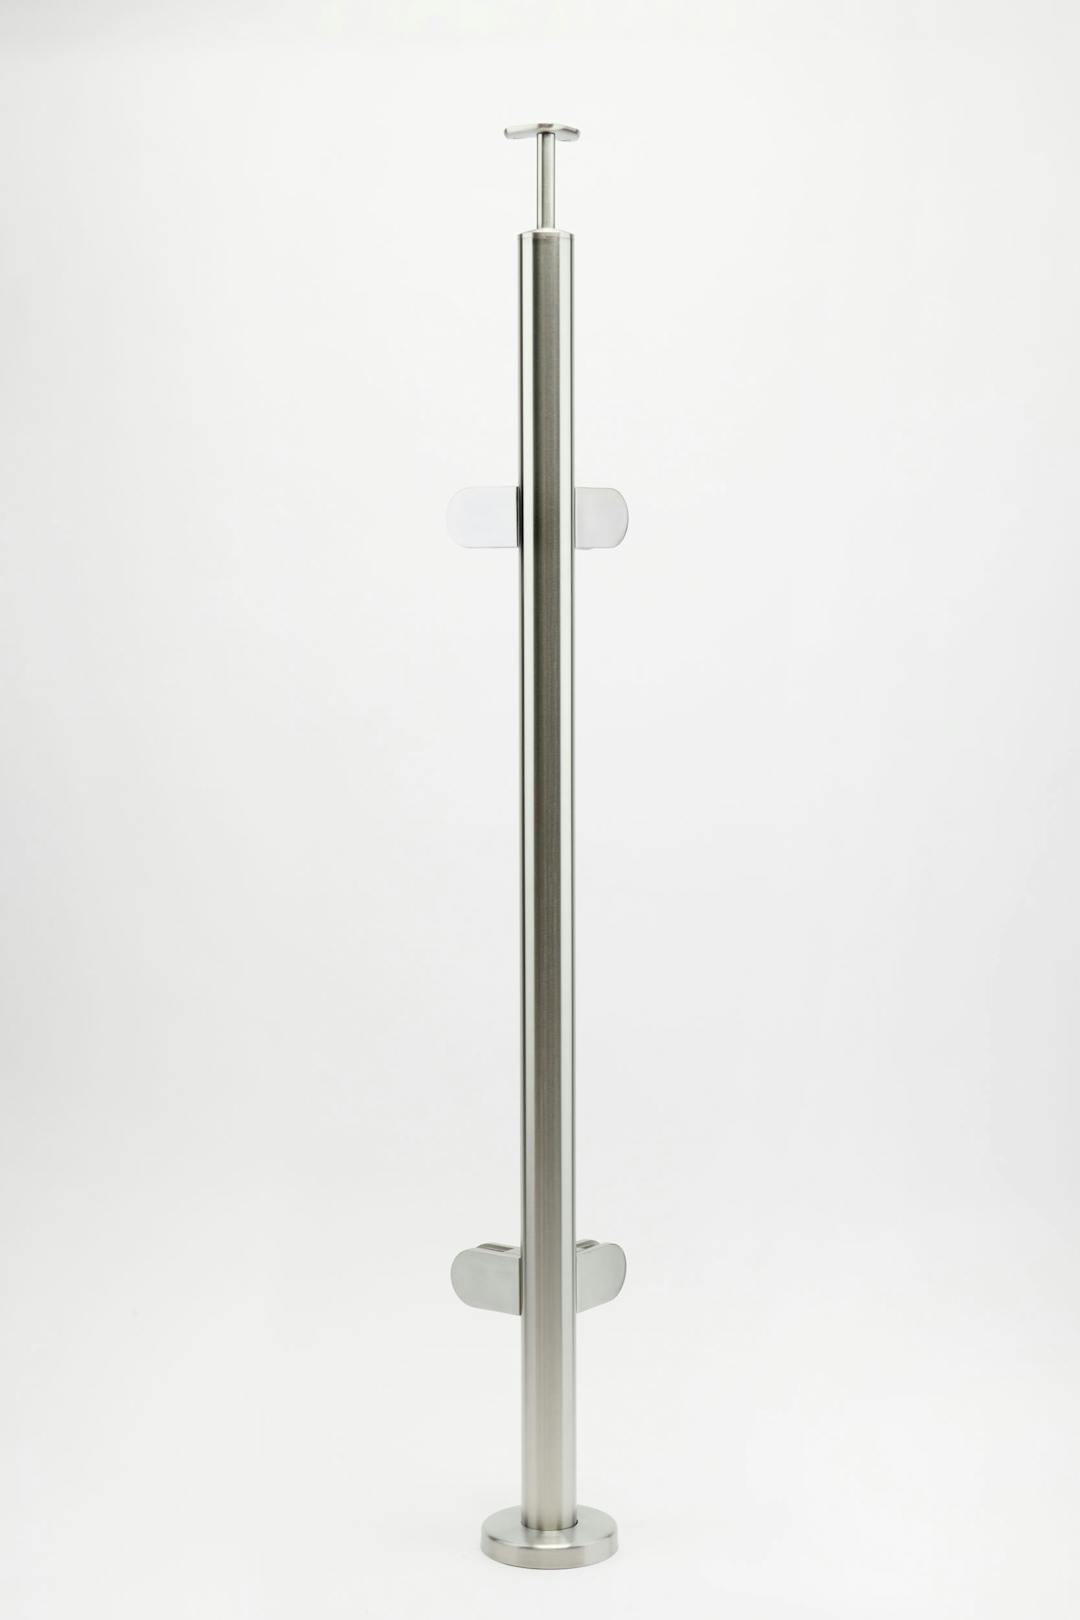 Mirror Polished Corner Post with Handrail Bracket